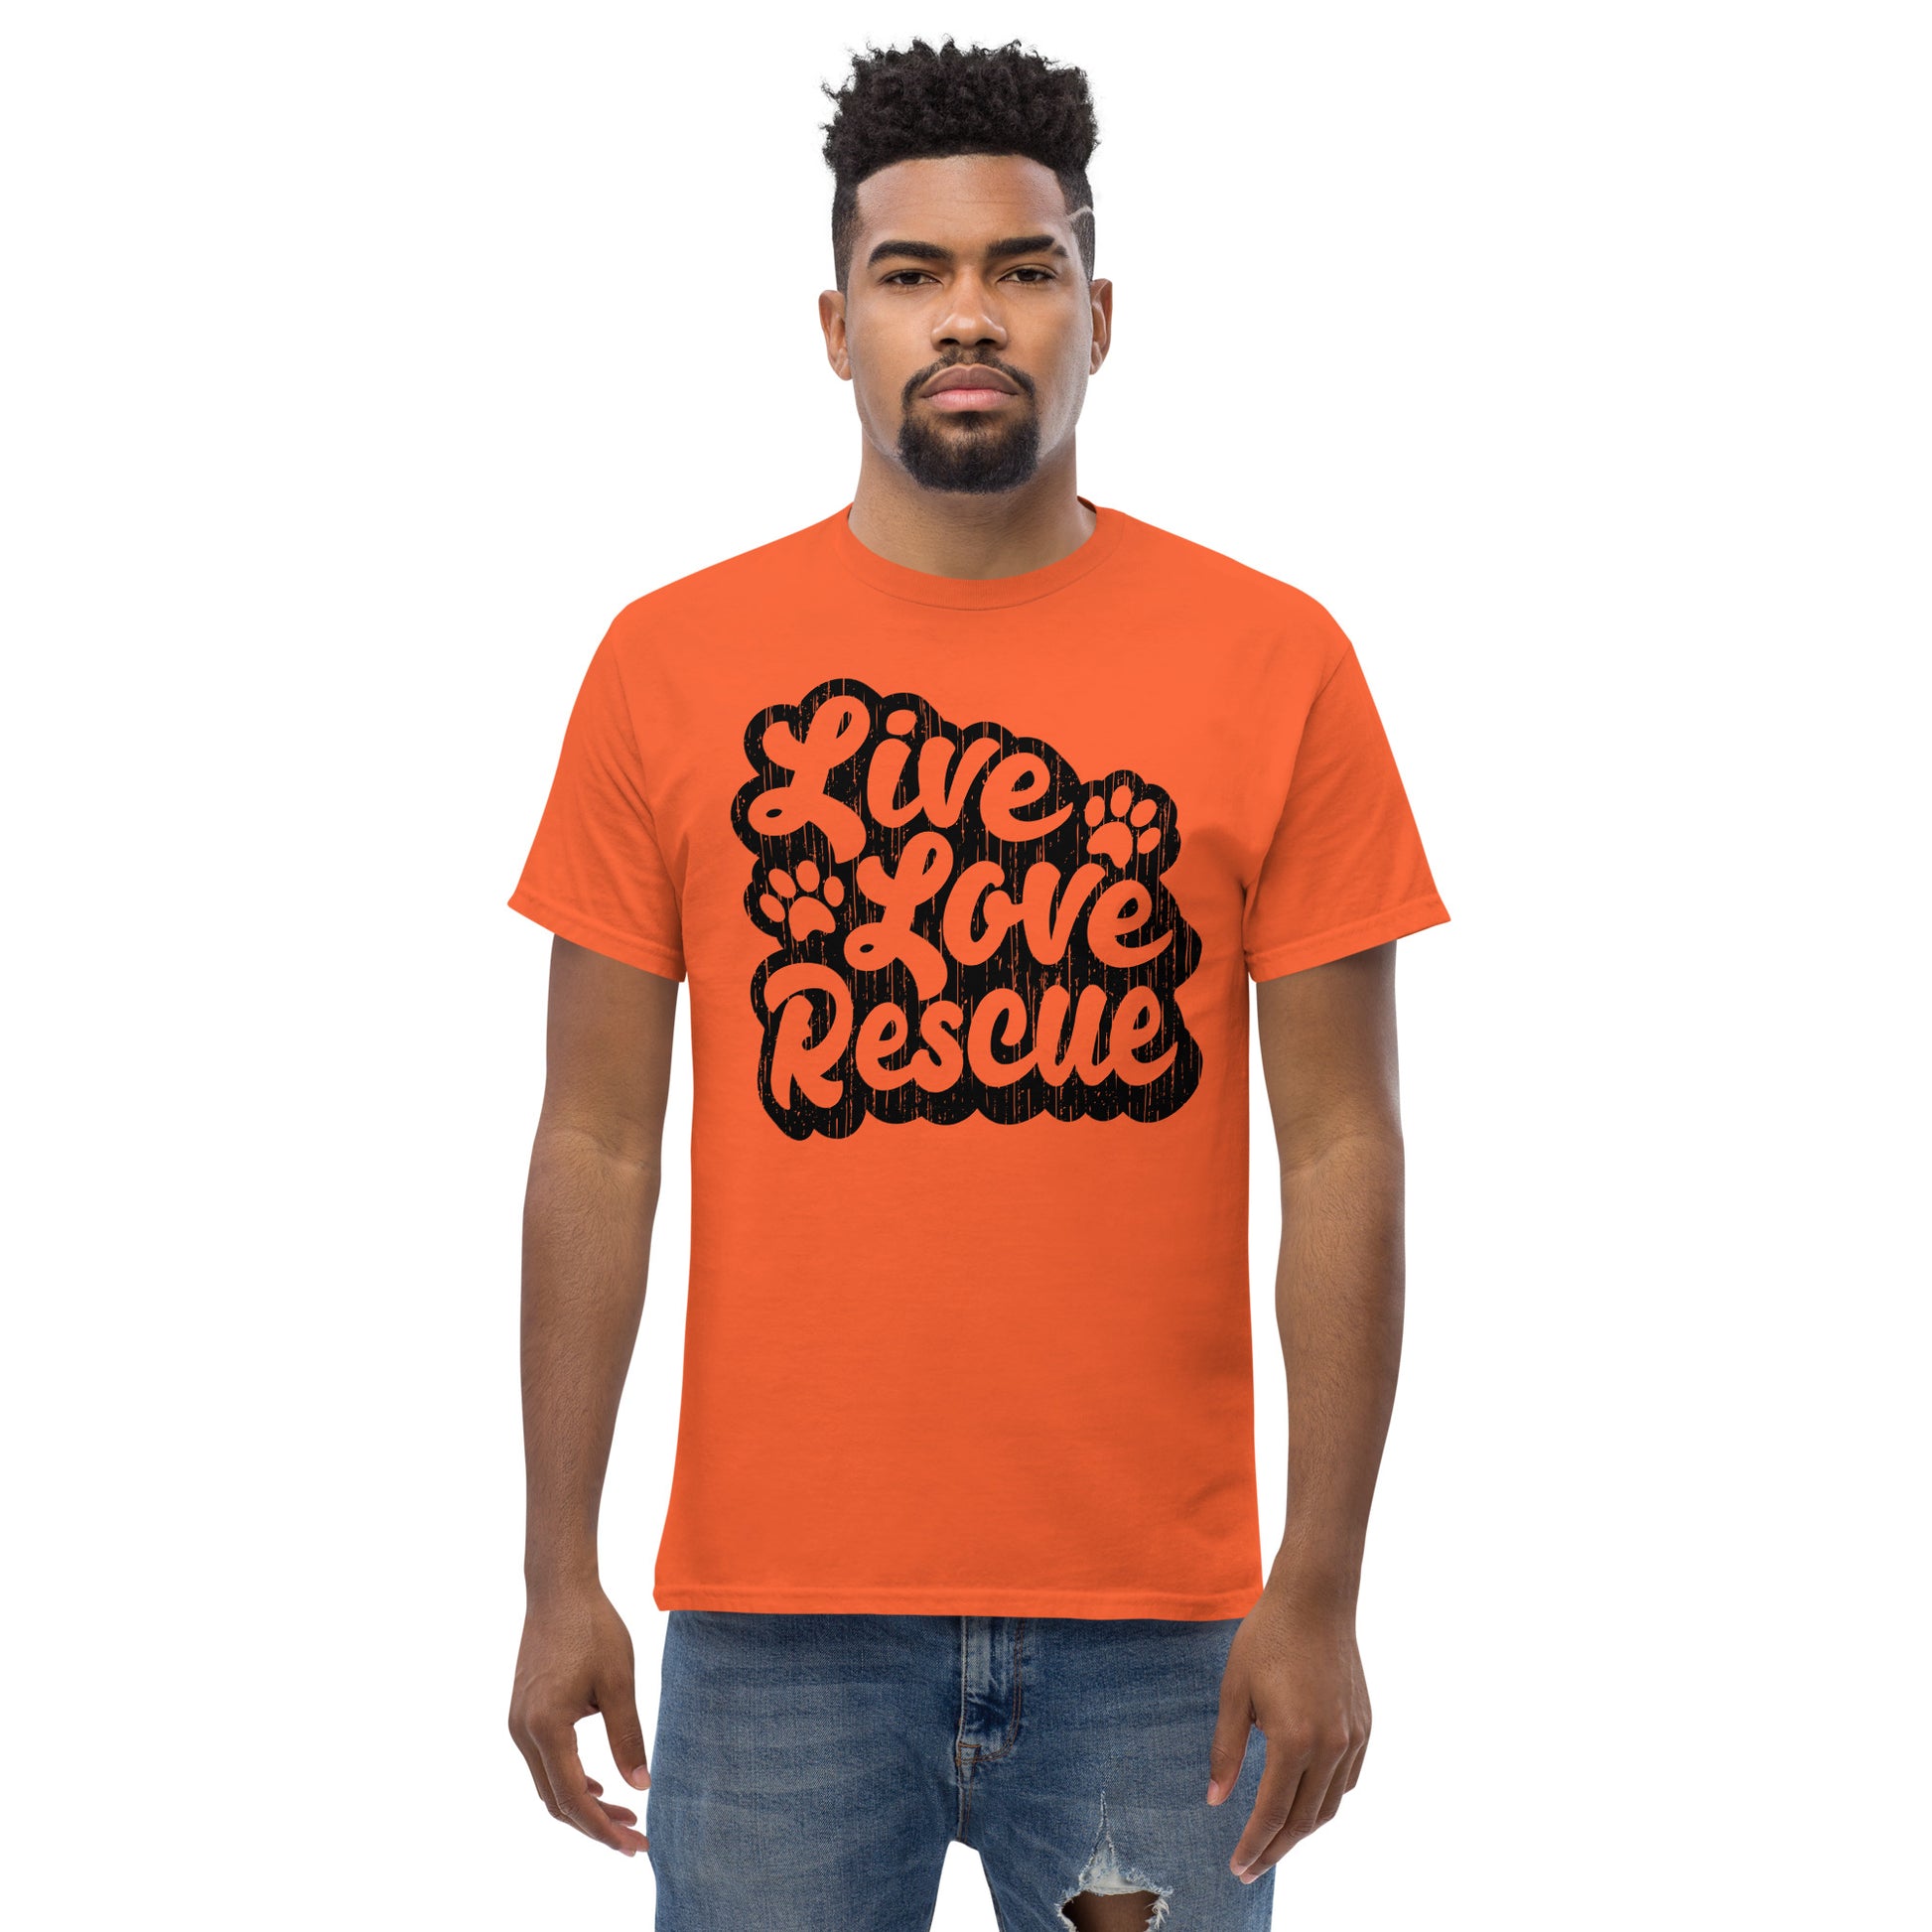 Live love rescue retro men’s t-shirts by Dog Artistry orange color